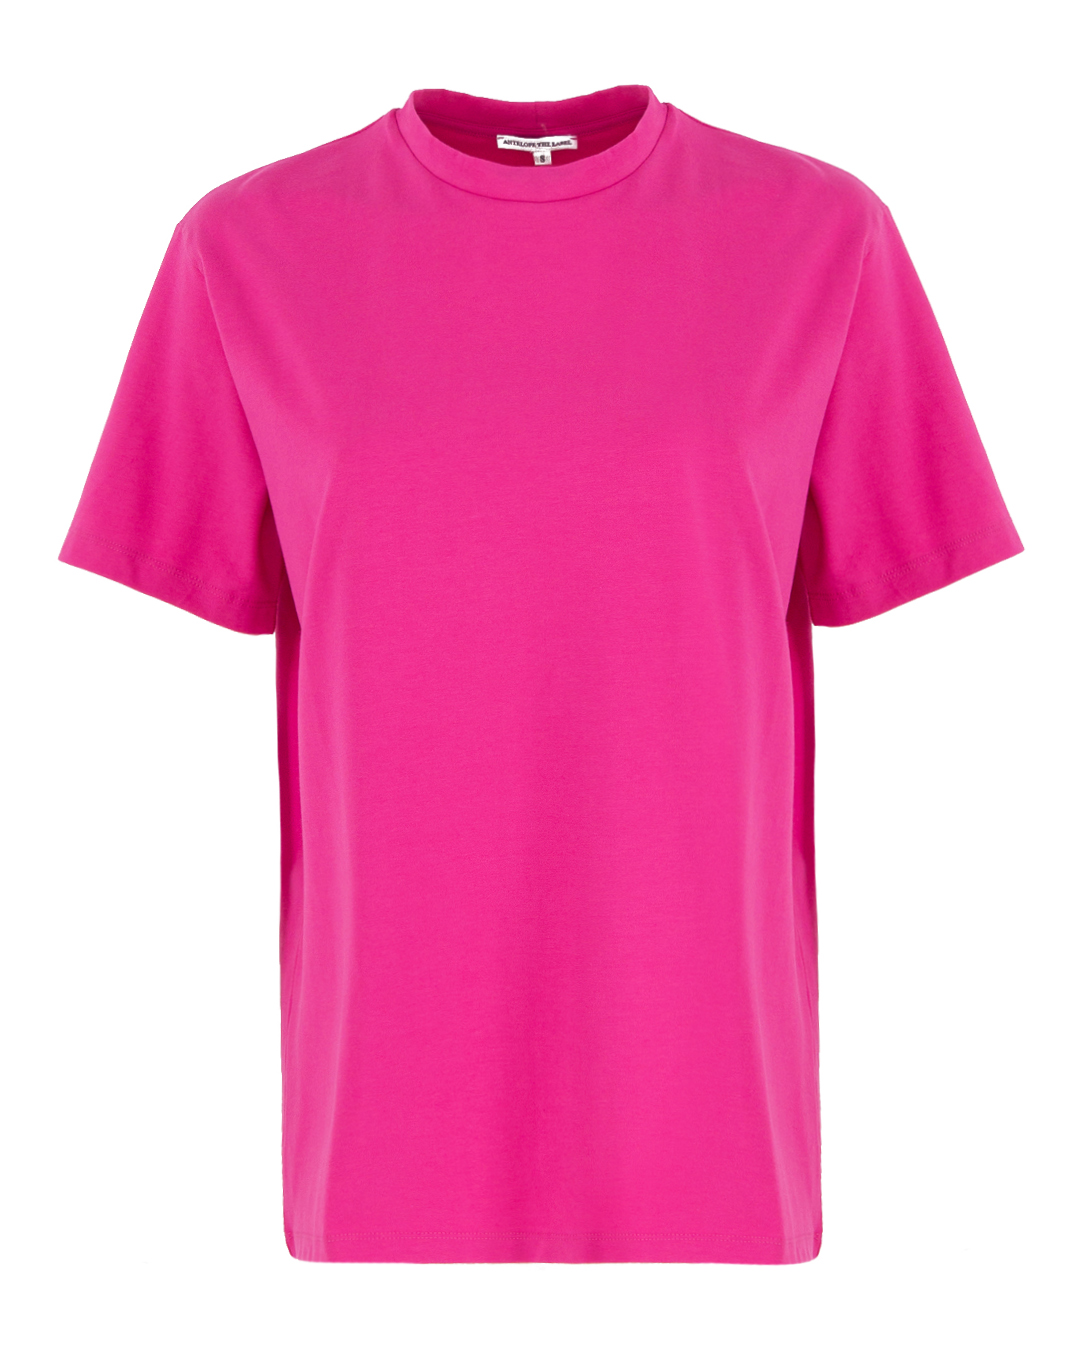 хлопковая футболка ANTELOPE THE LABEL T1.FUCHSIA розовый m, размер m